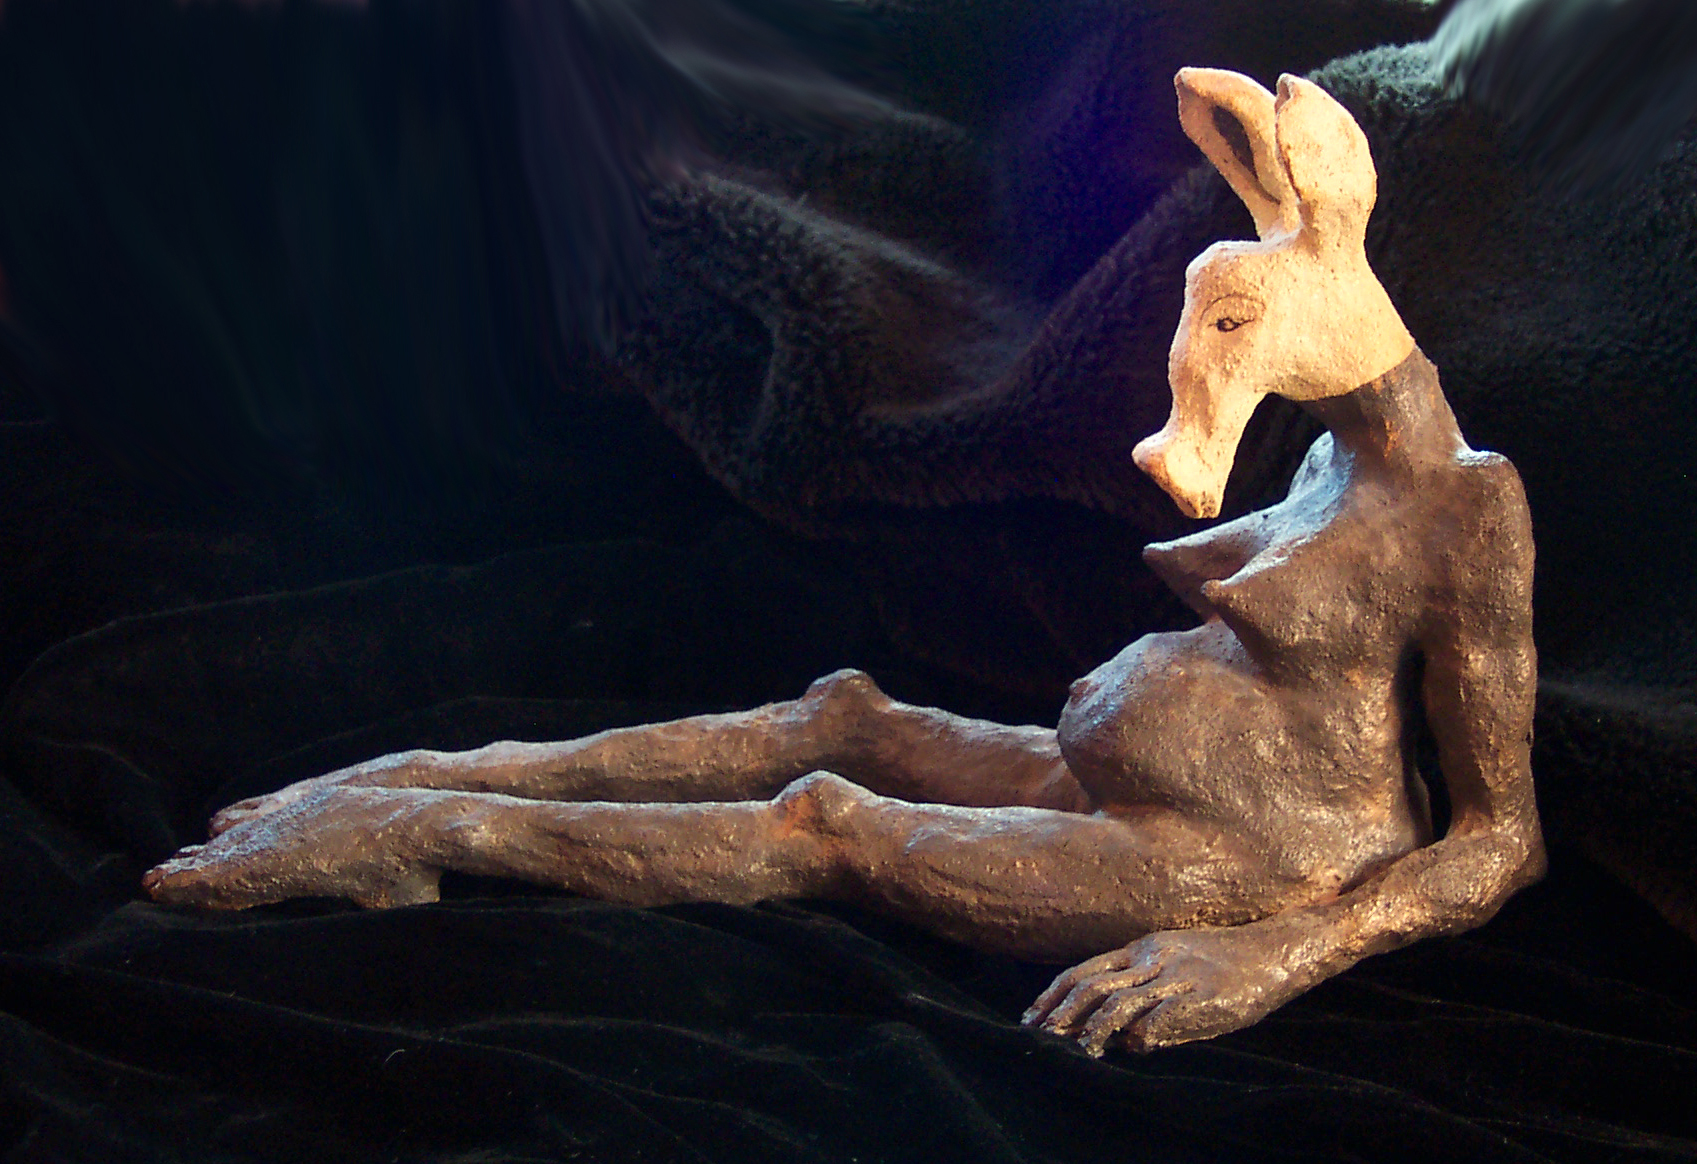  'Pregnant Aardvark' by CJ Munn (sold) 